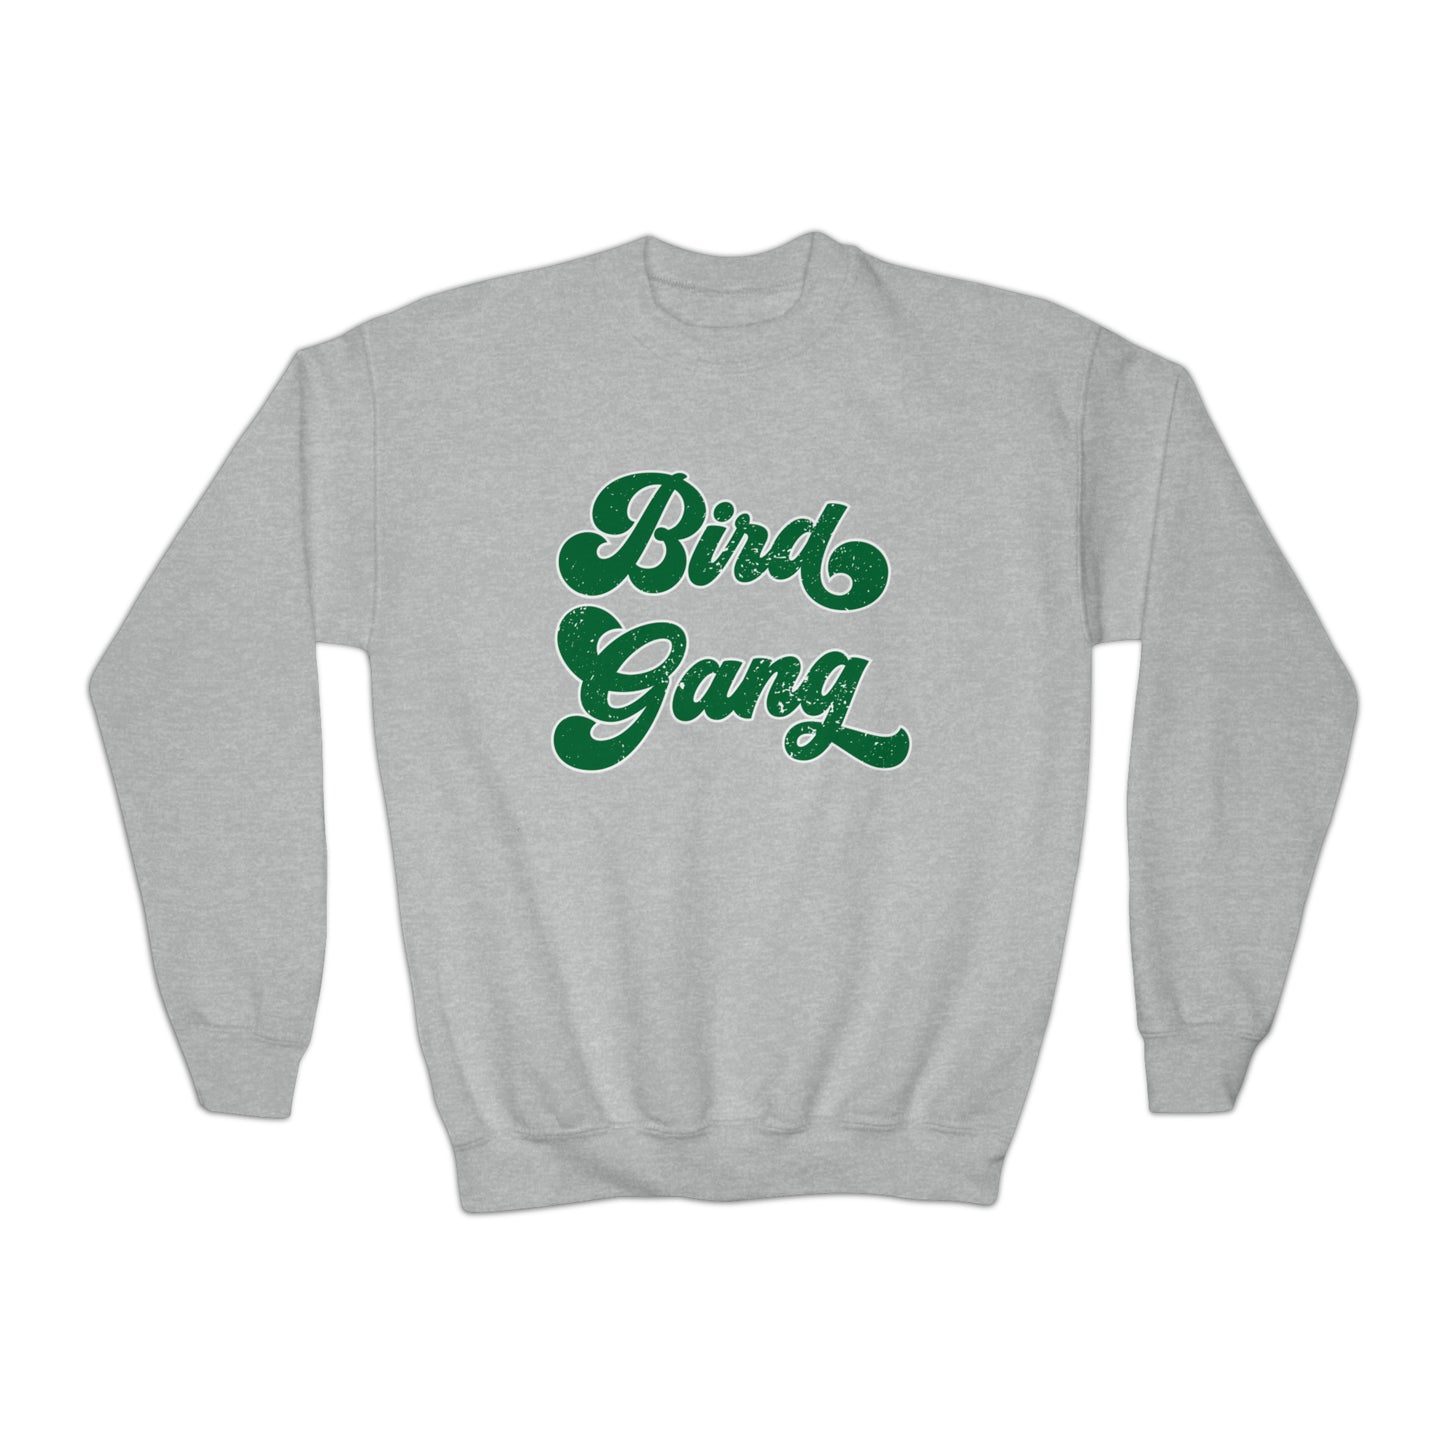 Bird Gang - Youth Crew